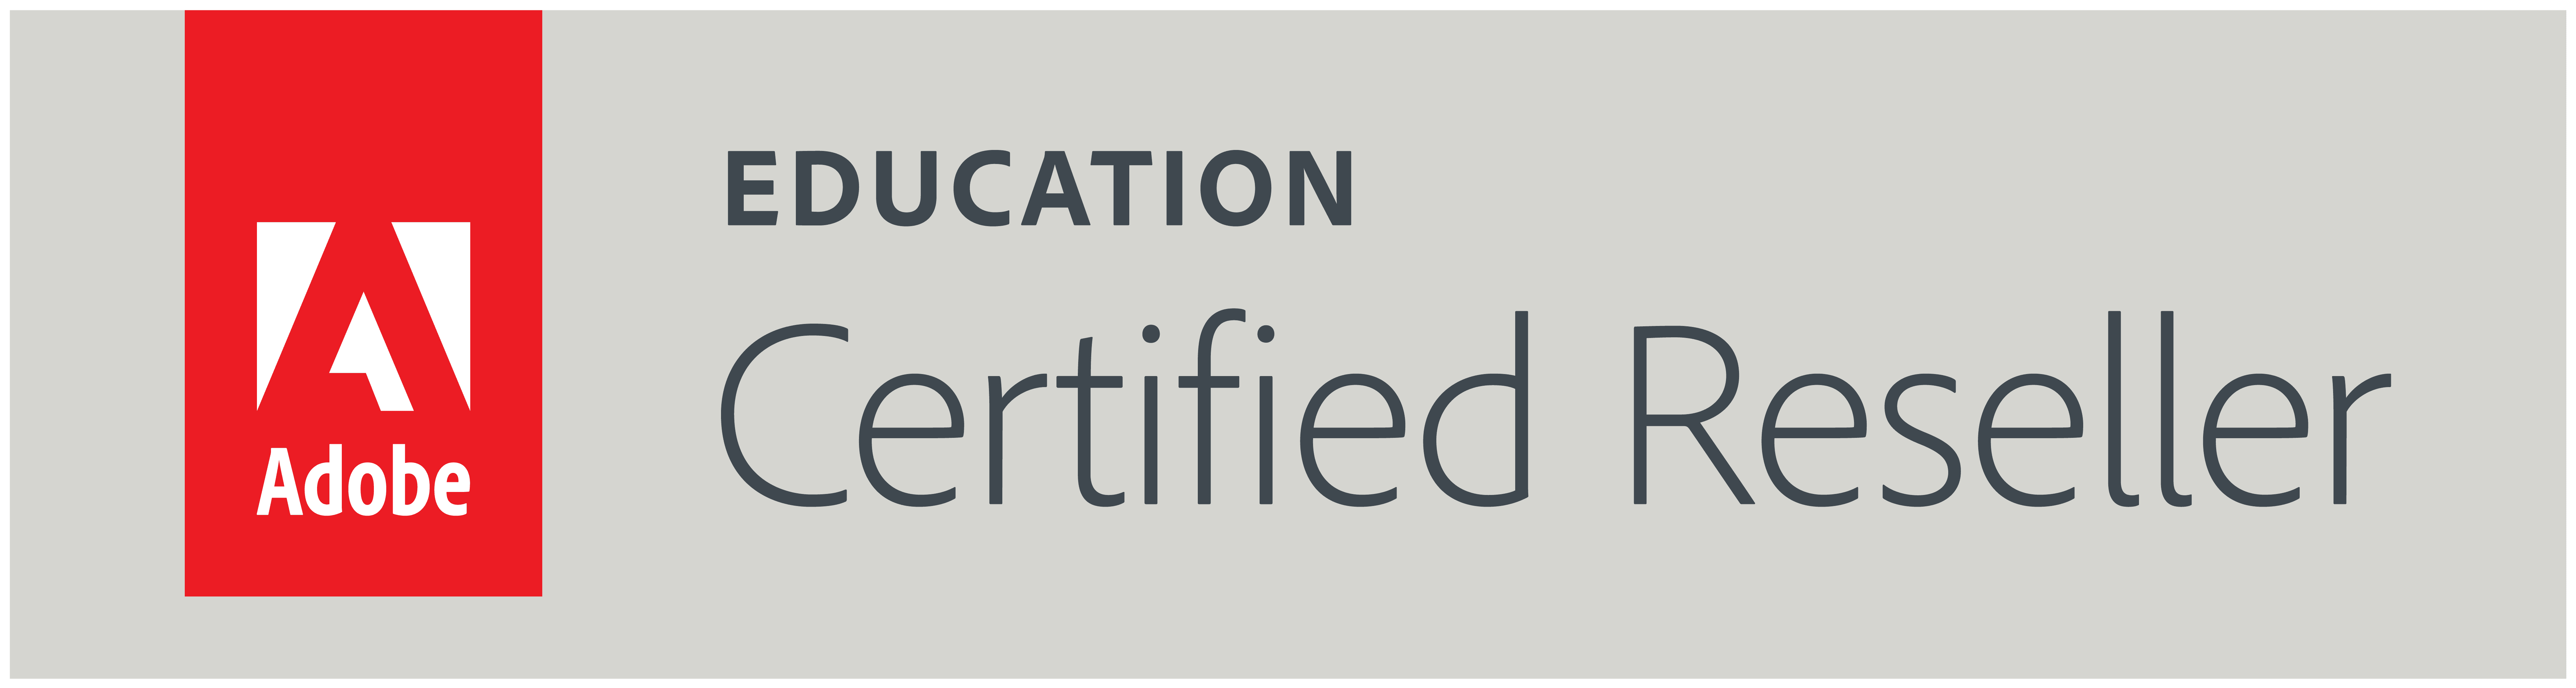 Adobe Connection Reseller Program: Education Certified Reseller